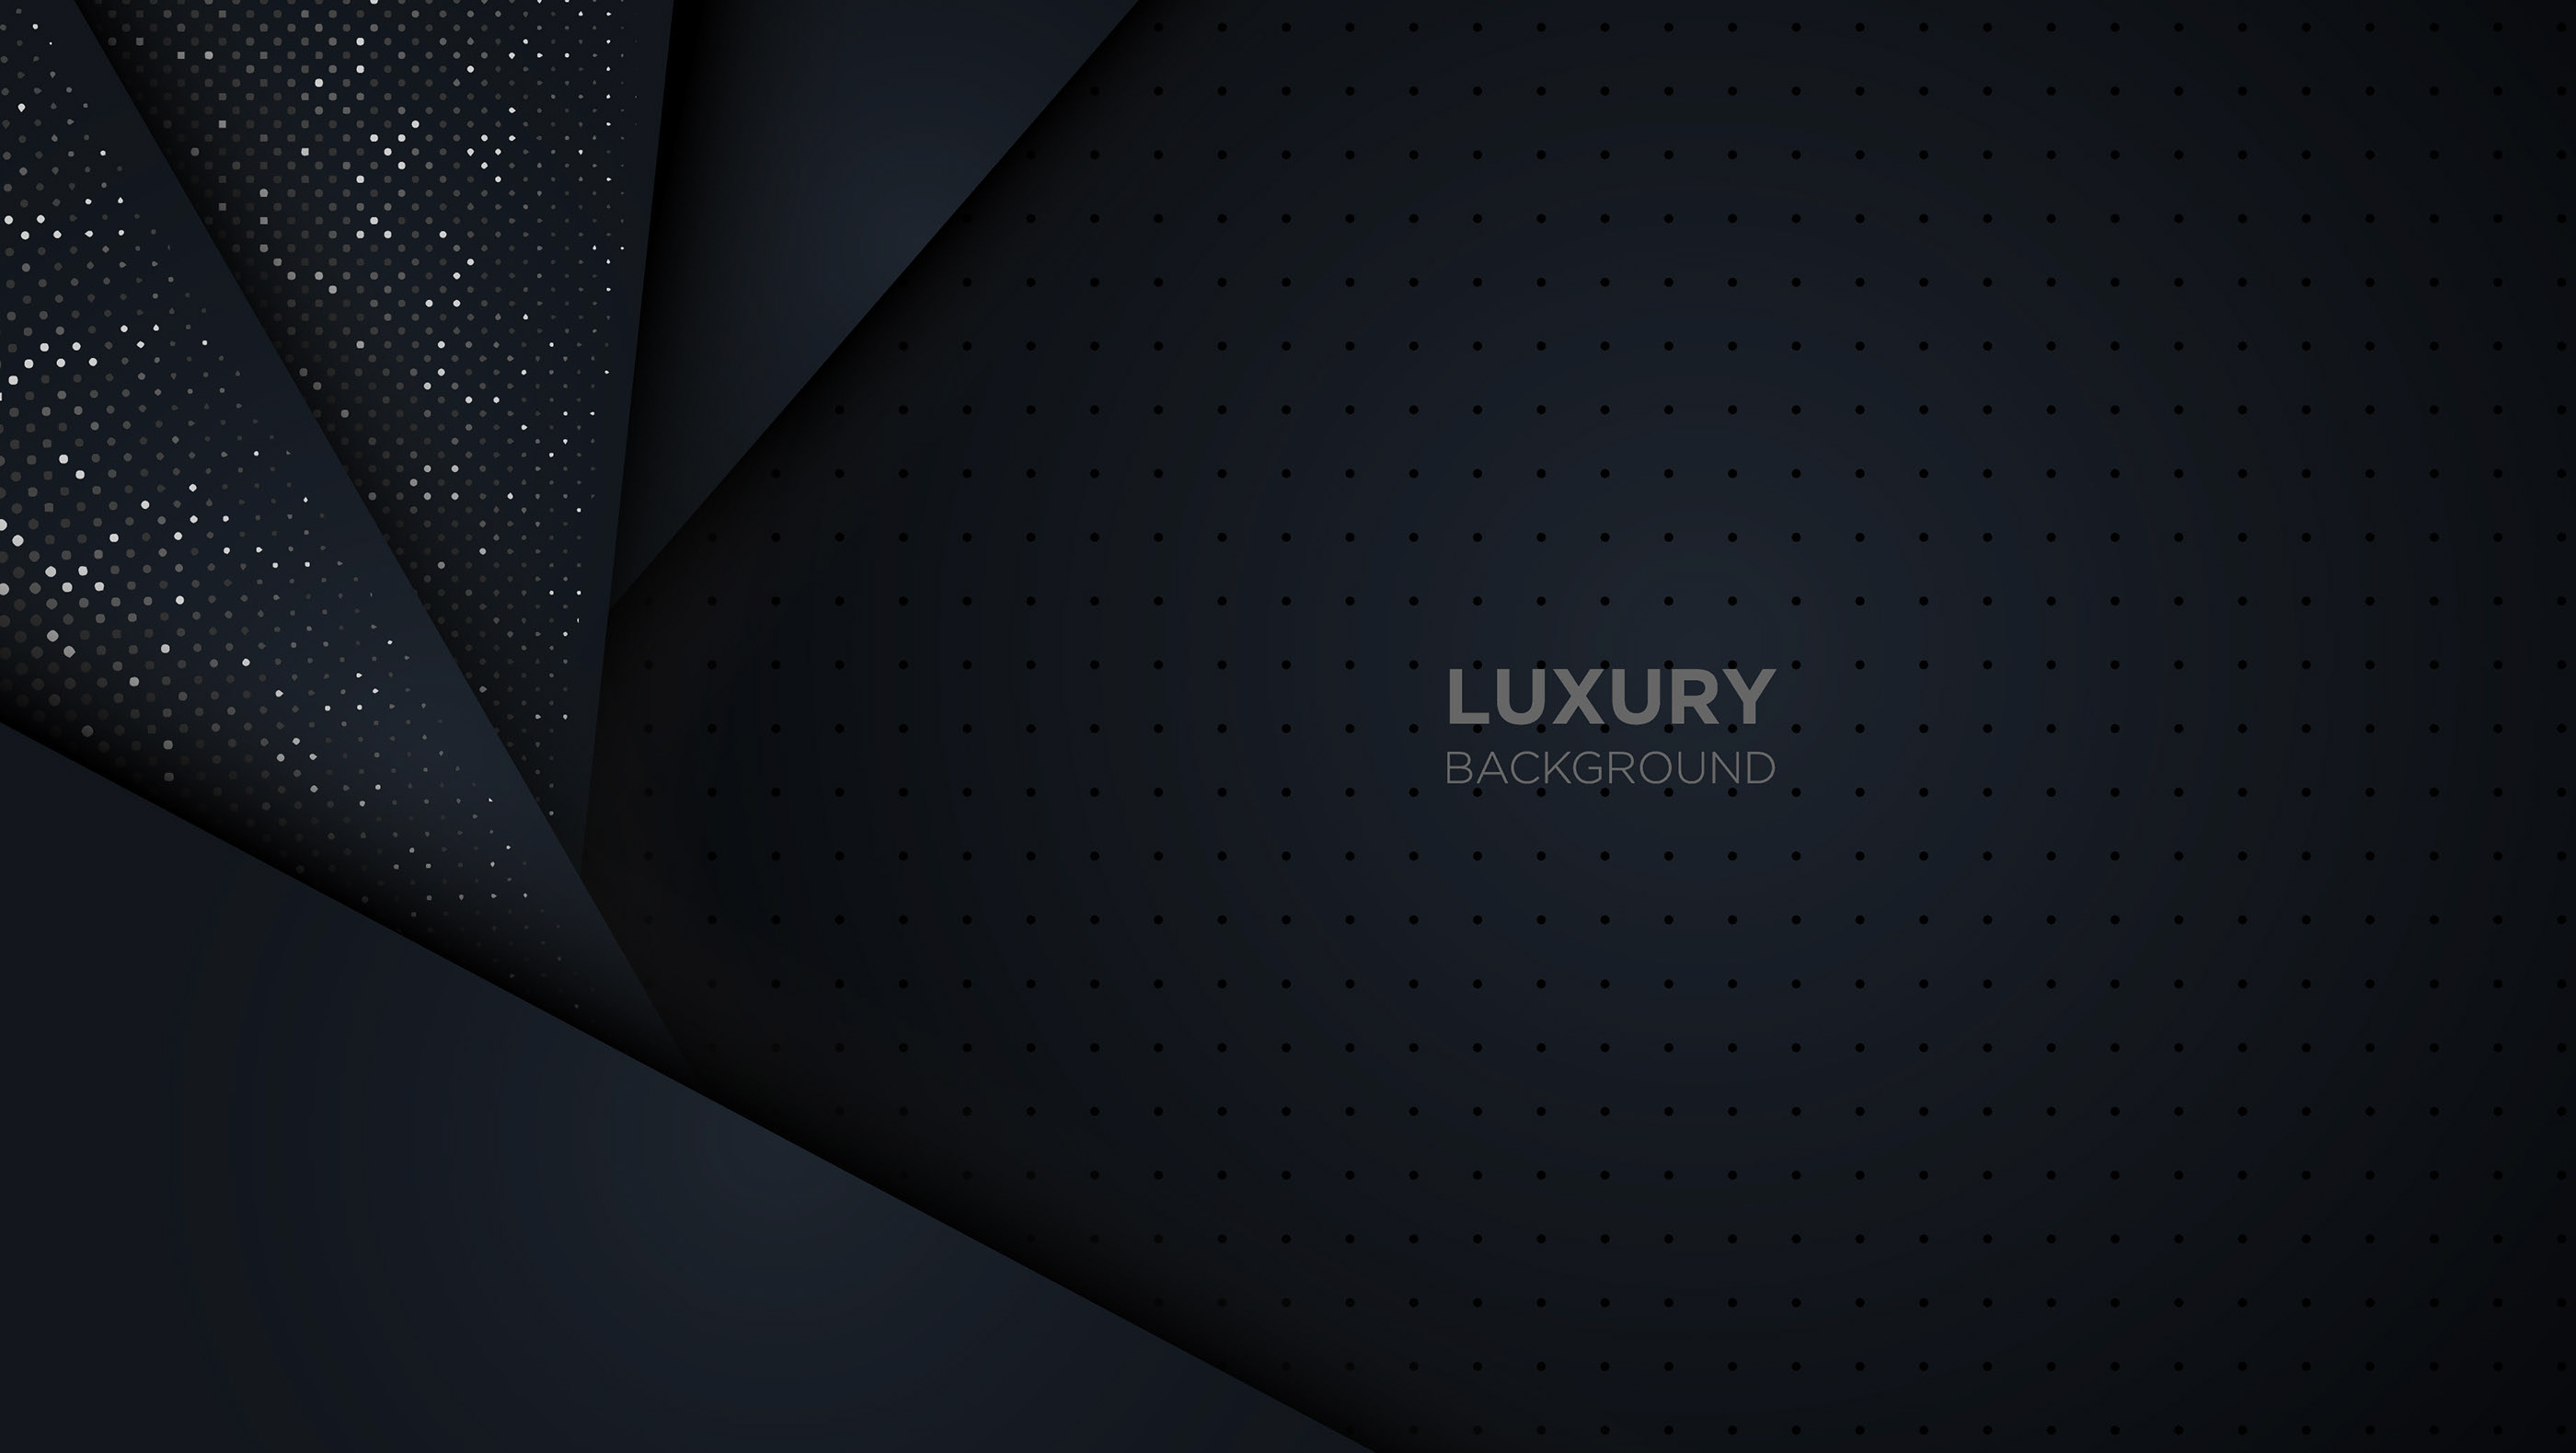 Luxury Backgrounds Design on Behance